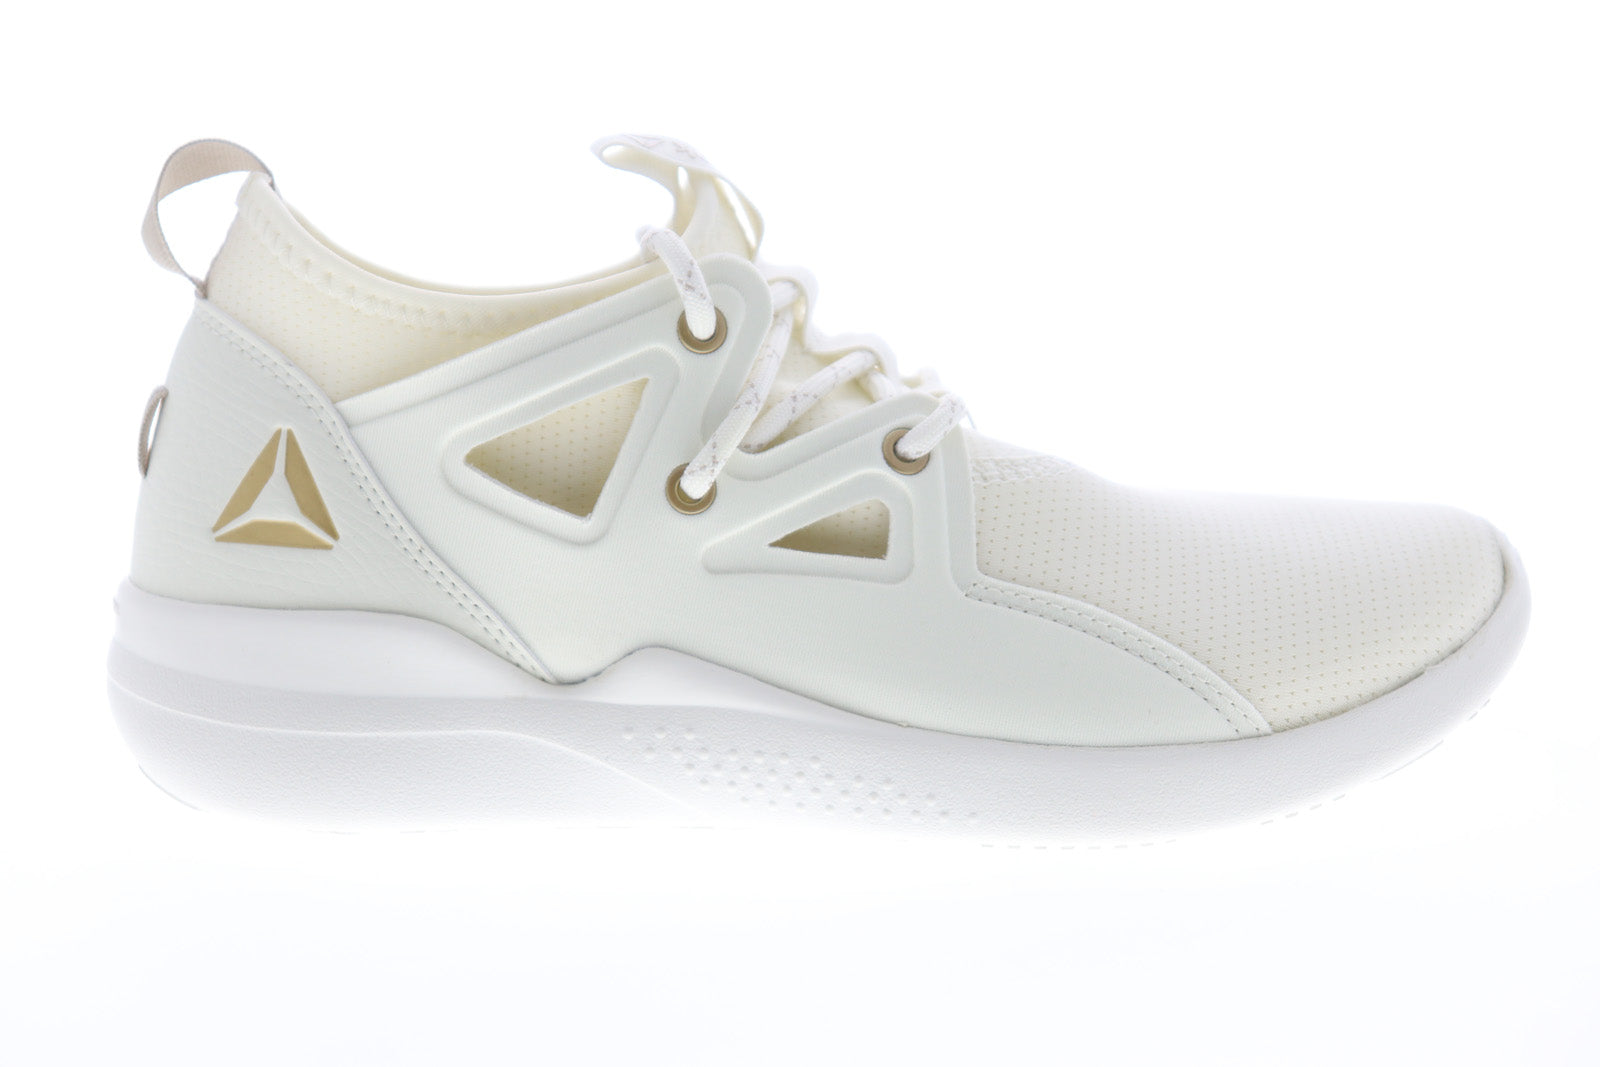 Reebok Cardio Motion Womens Beige Tan Low Top Athletic Cross Training Ruze Shoes